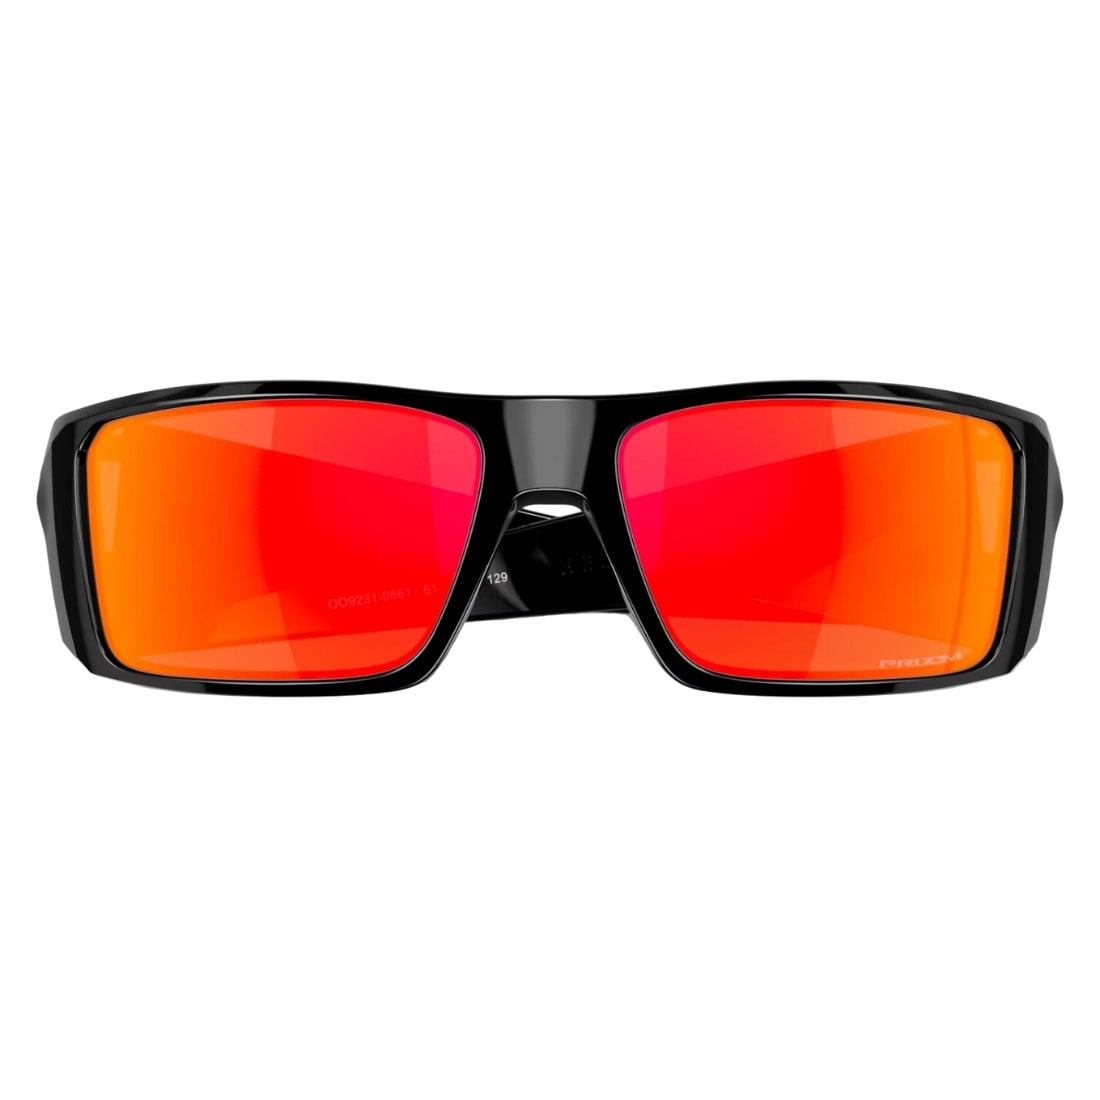 Oakley Heliostat Sunglasses - Polished Black/Prism Ruby - Wrap Around Sunglasses by Oakley